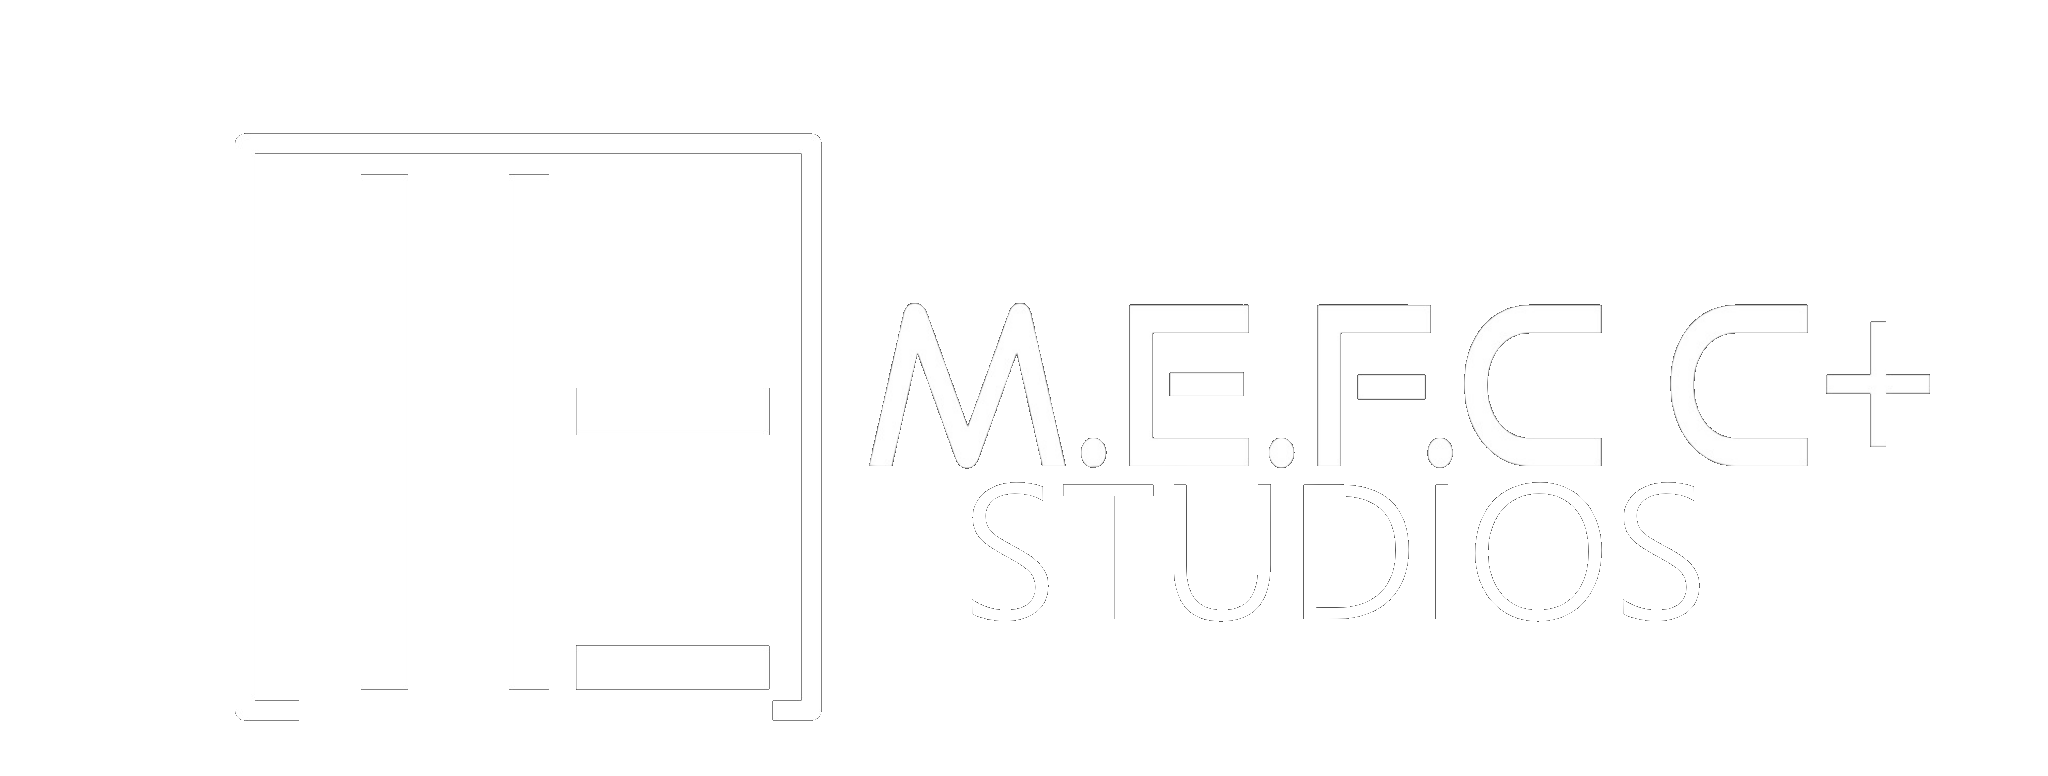 MEF_LOGO_STUDIOS